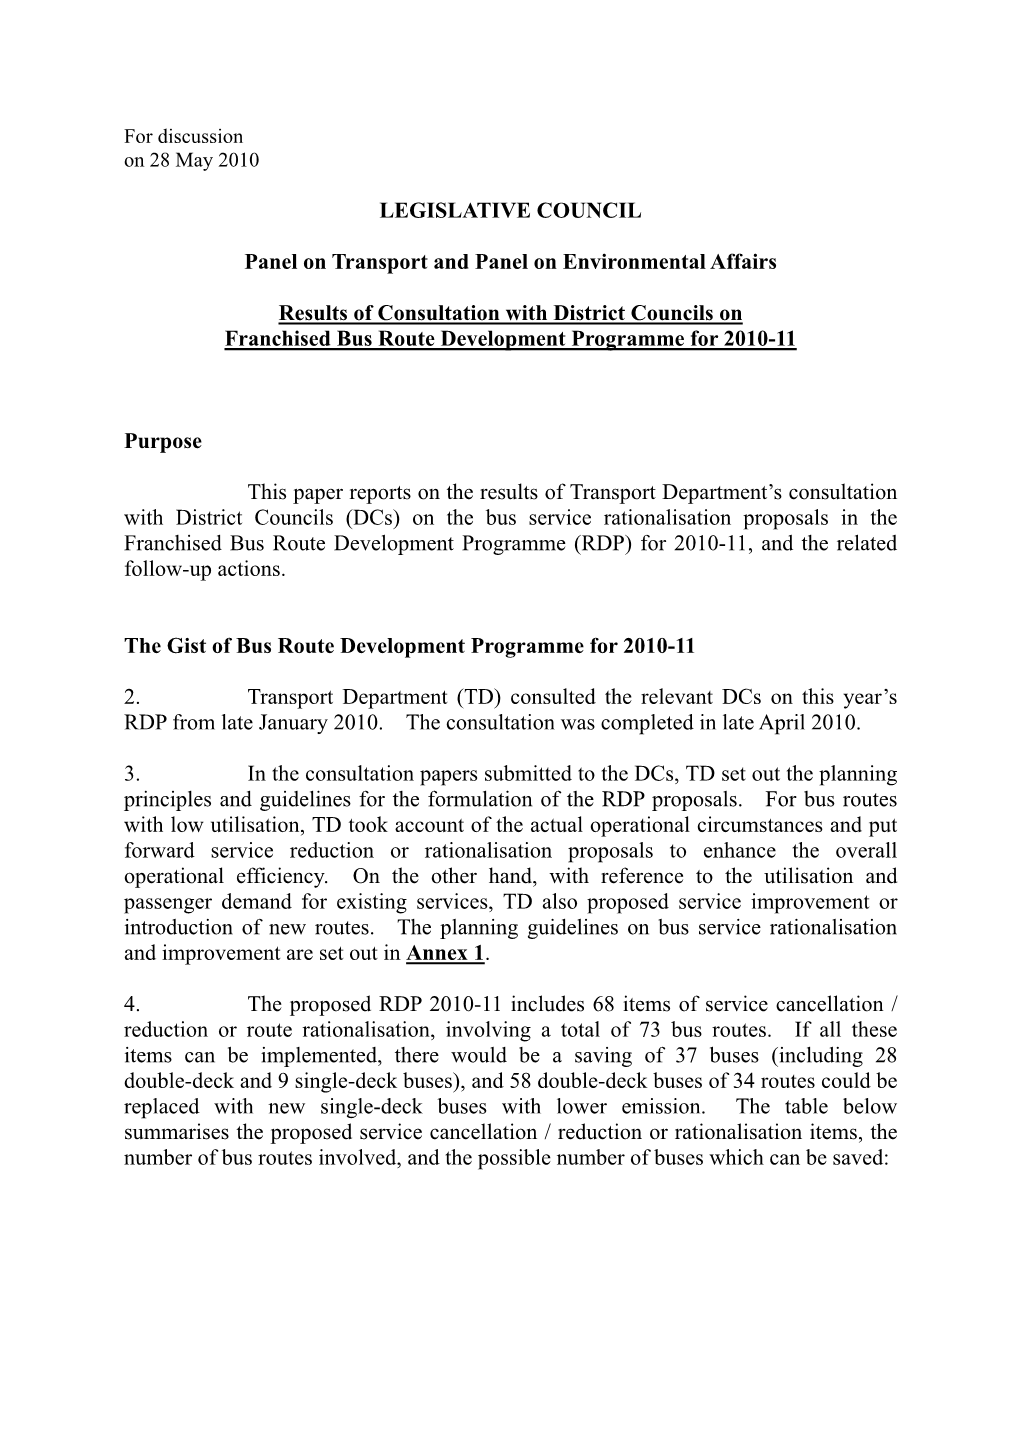 LEGISLATIVE COUNCIL Panel on Transport and Panel On